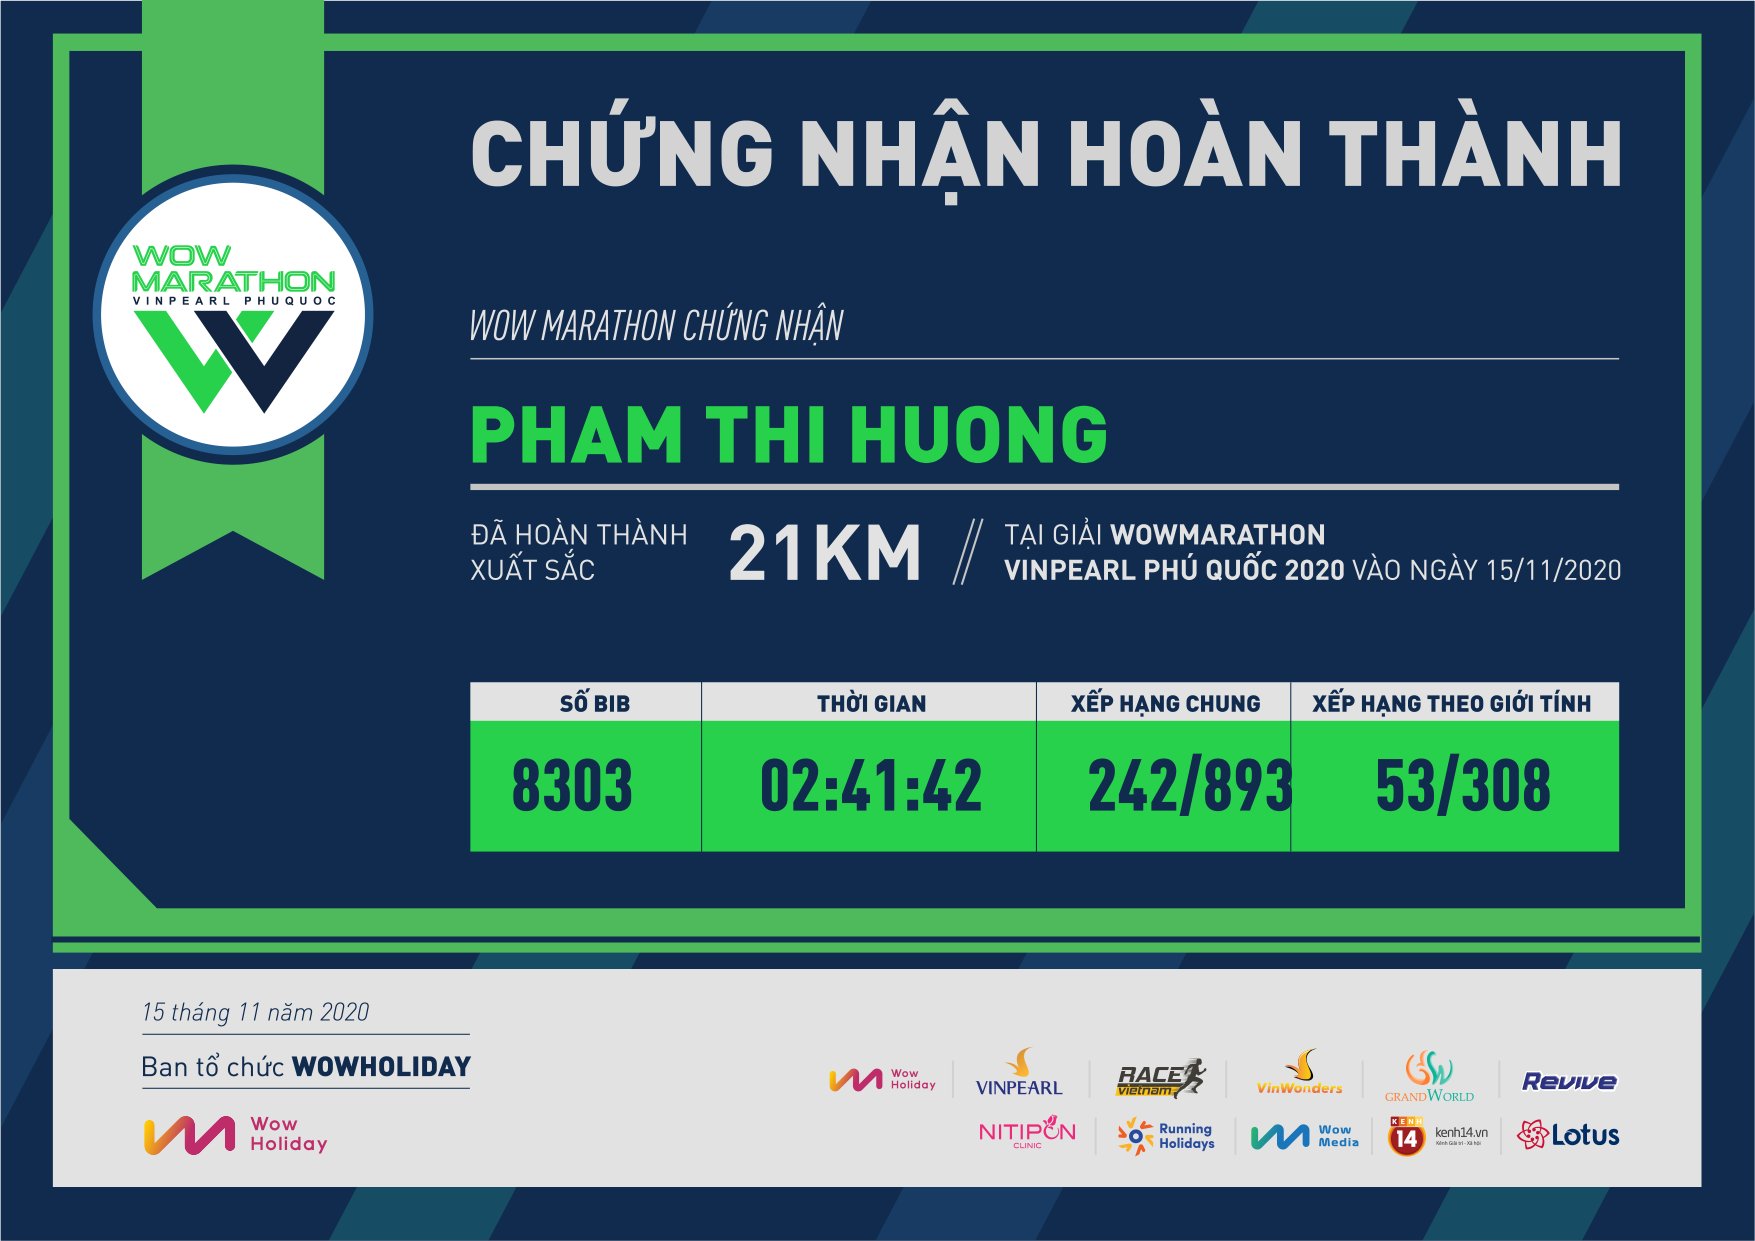 8303 - Pham Thi Huong